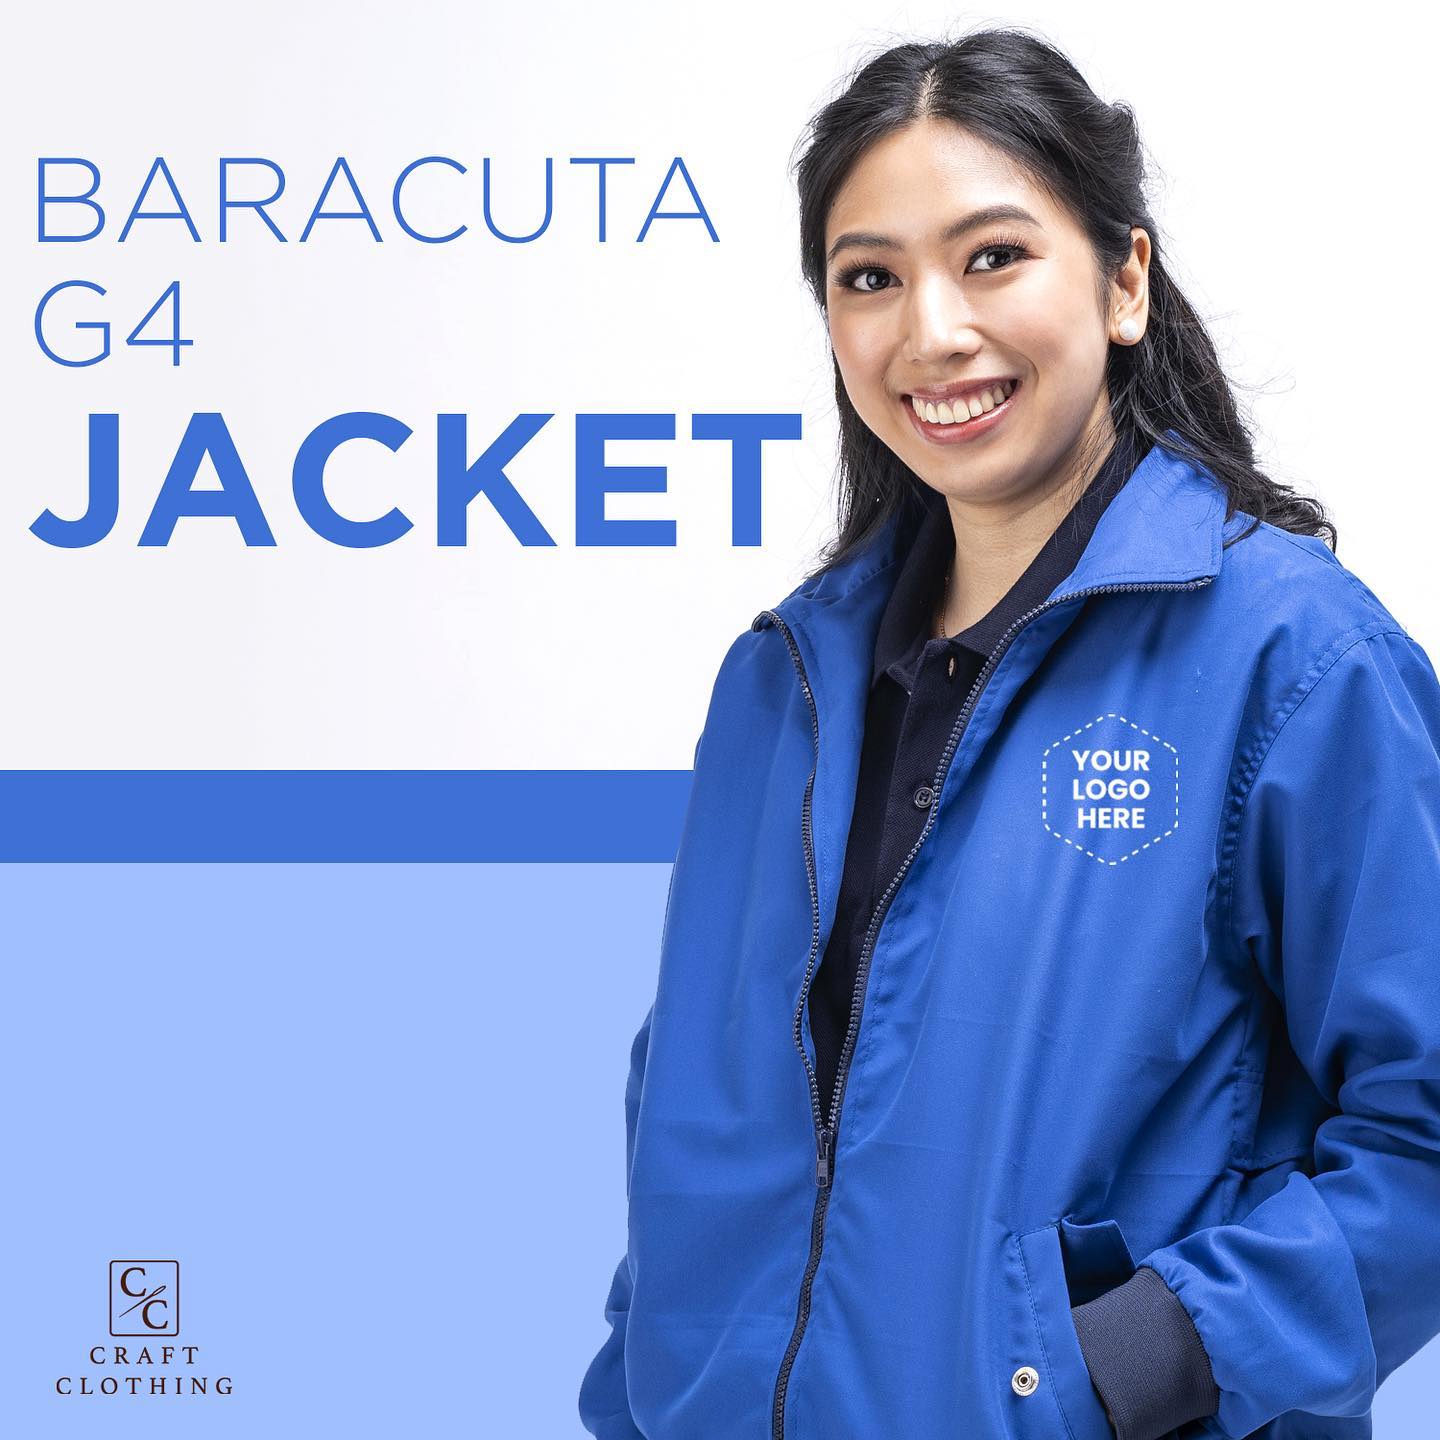 The Baracuta G4 Jacket